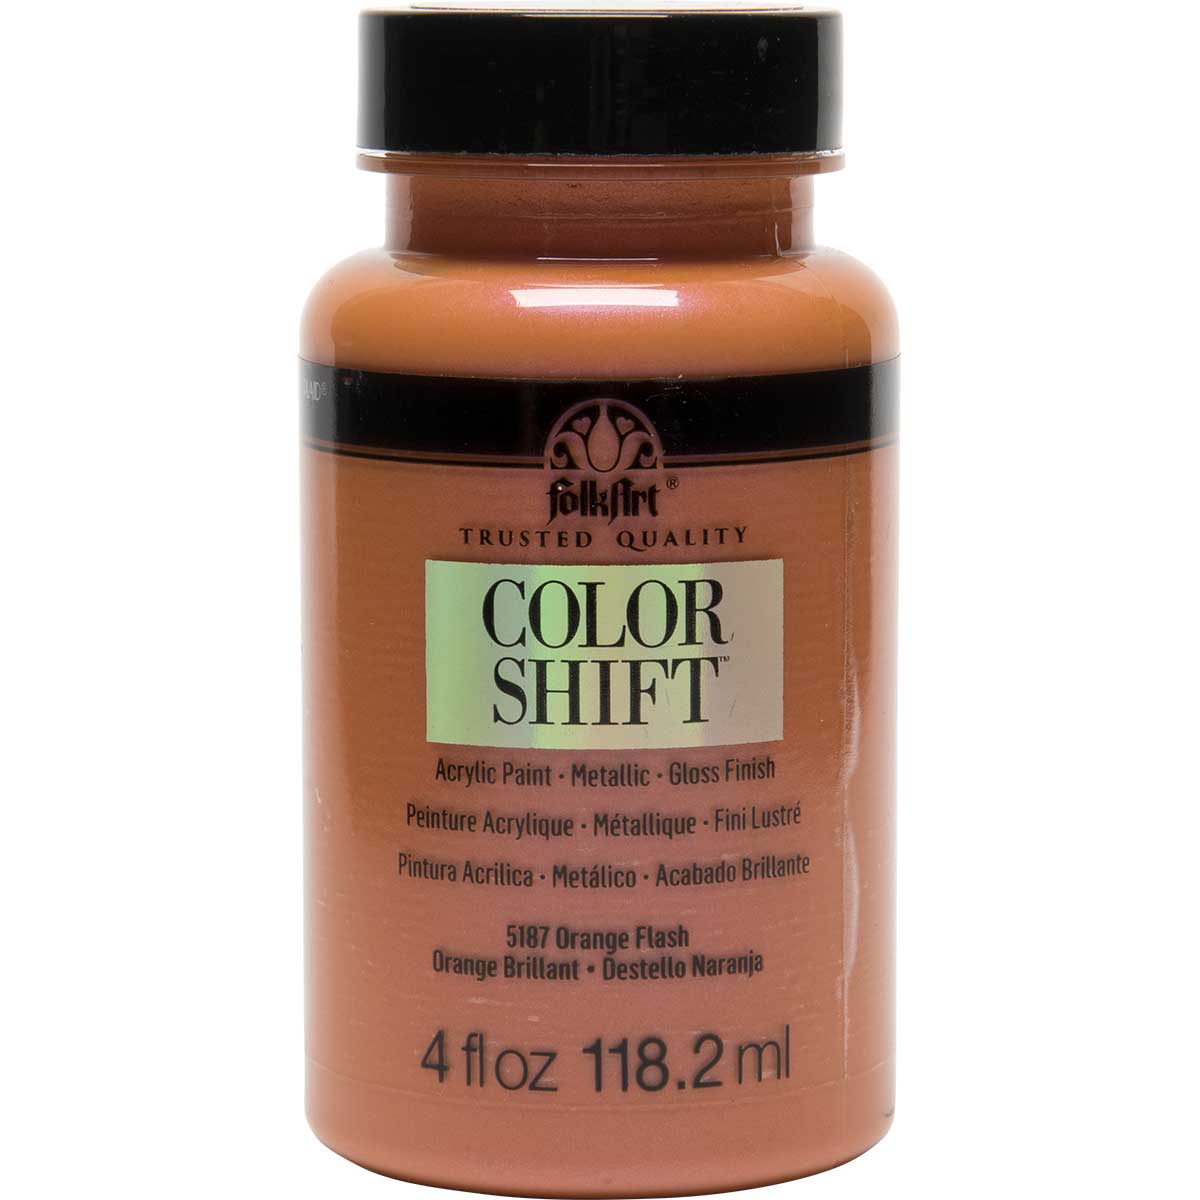 FolkArt ® Color Shift™ Acrylic Paint - Orange Flash, 4 oz. - 5187